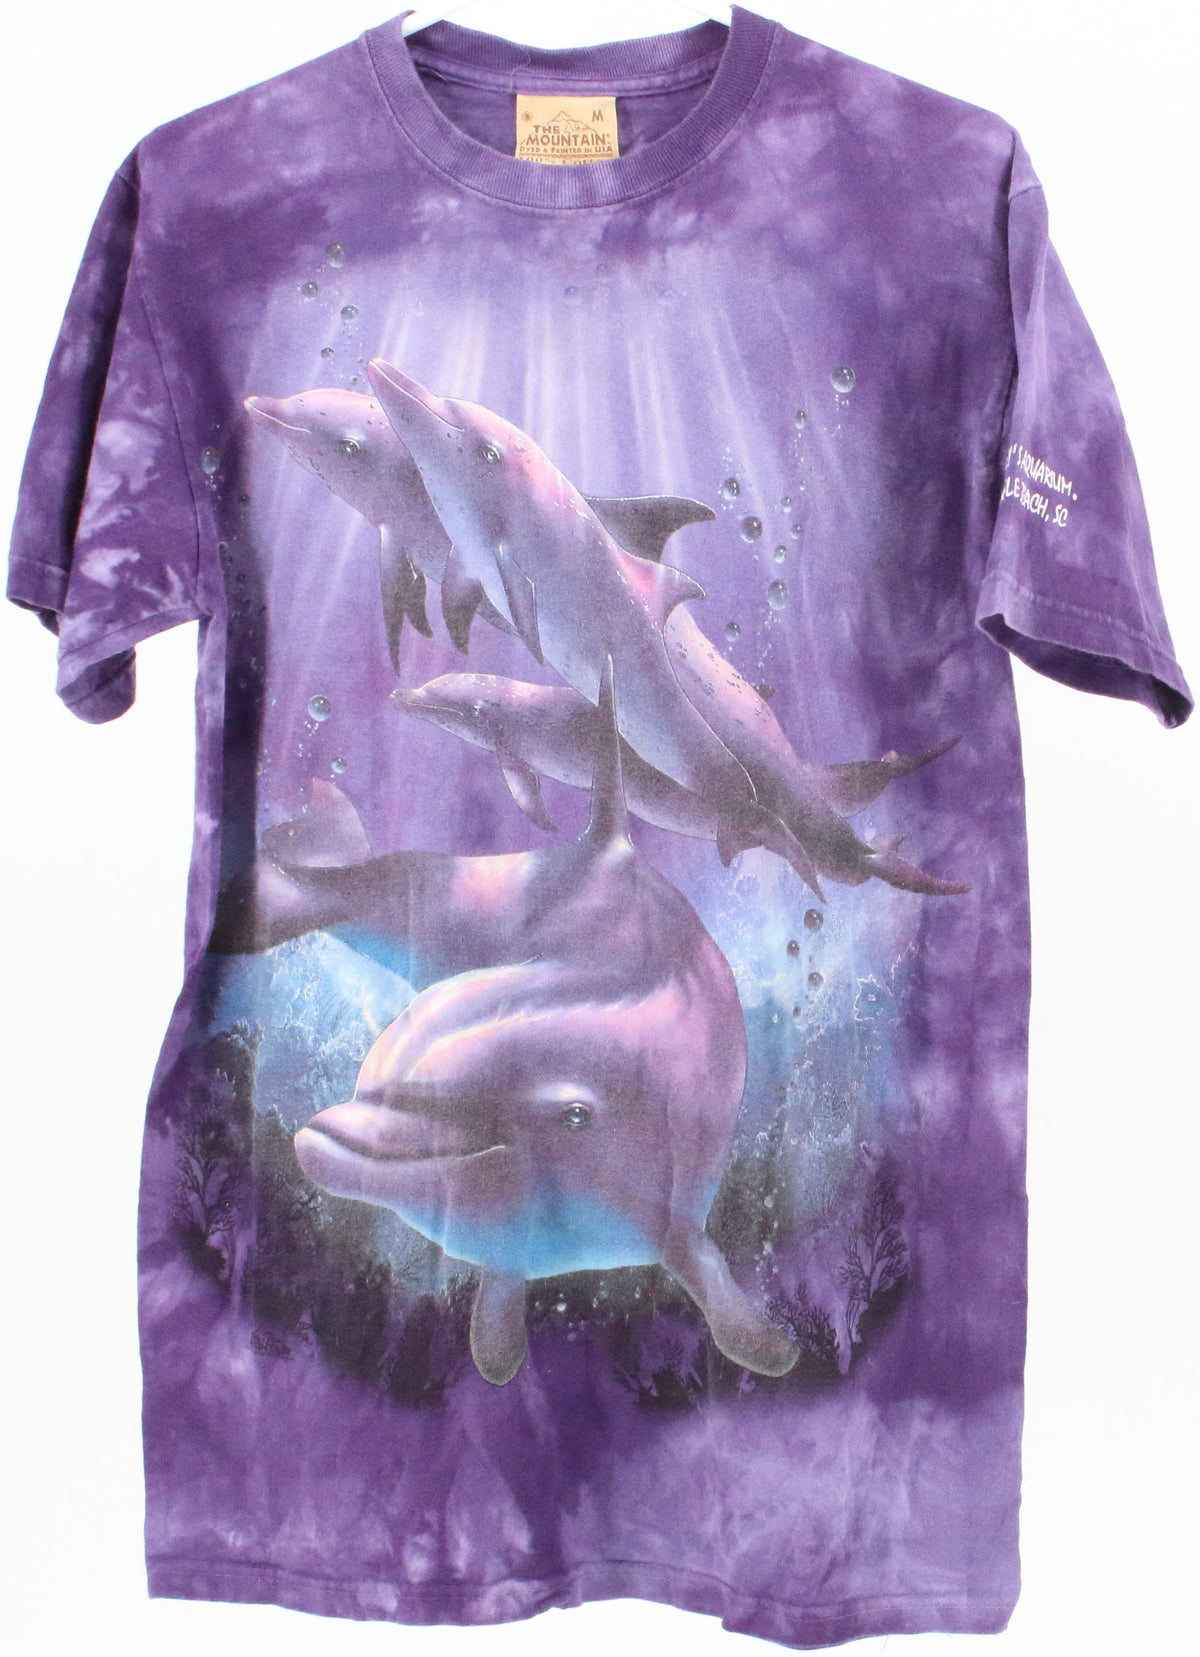 The Mountain Ripley's Aquarium Purple Tie-Dye T-Shirt